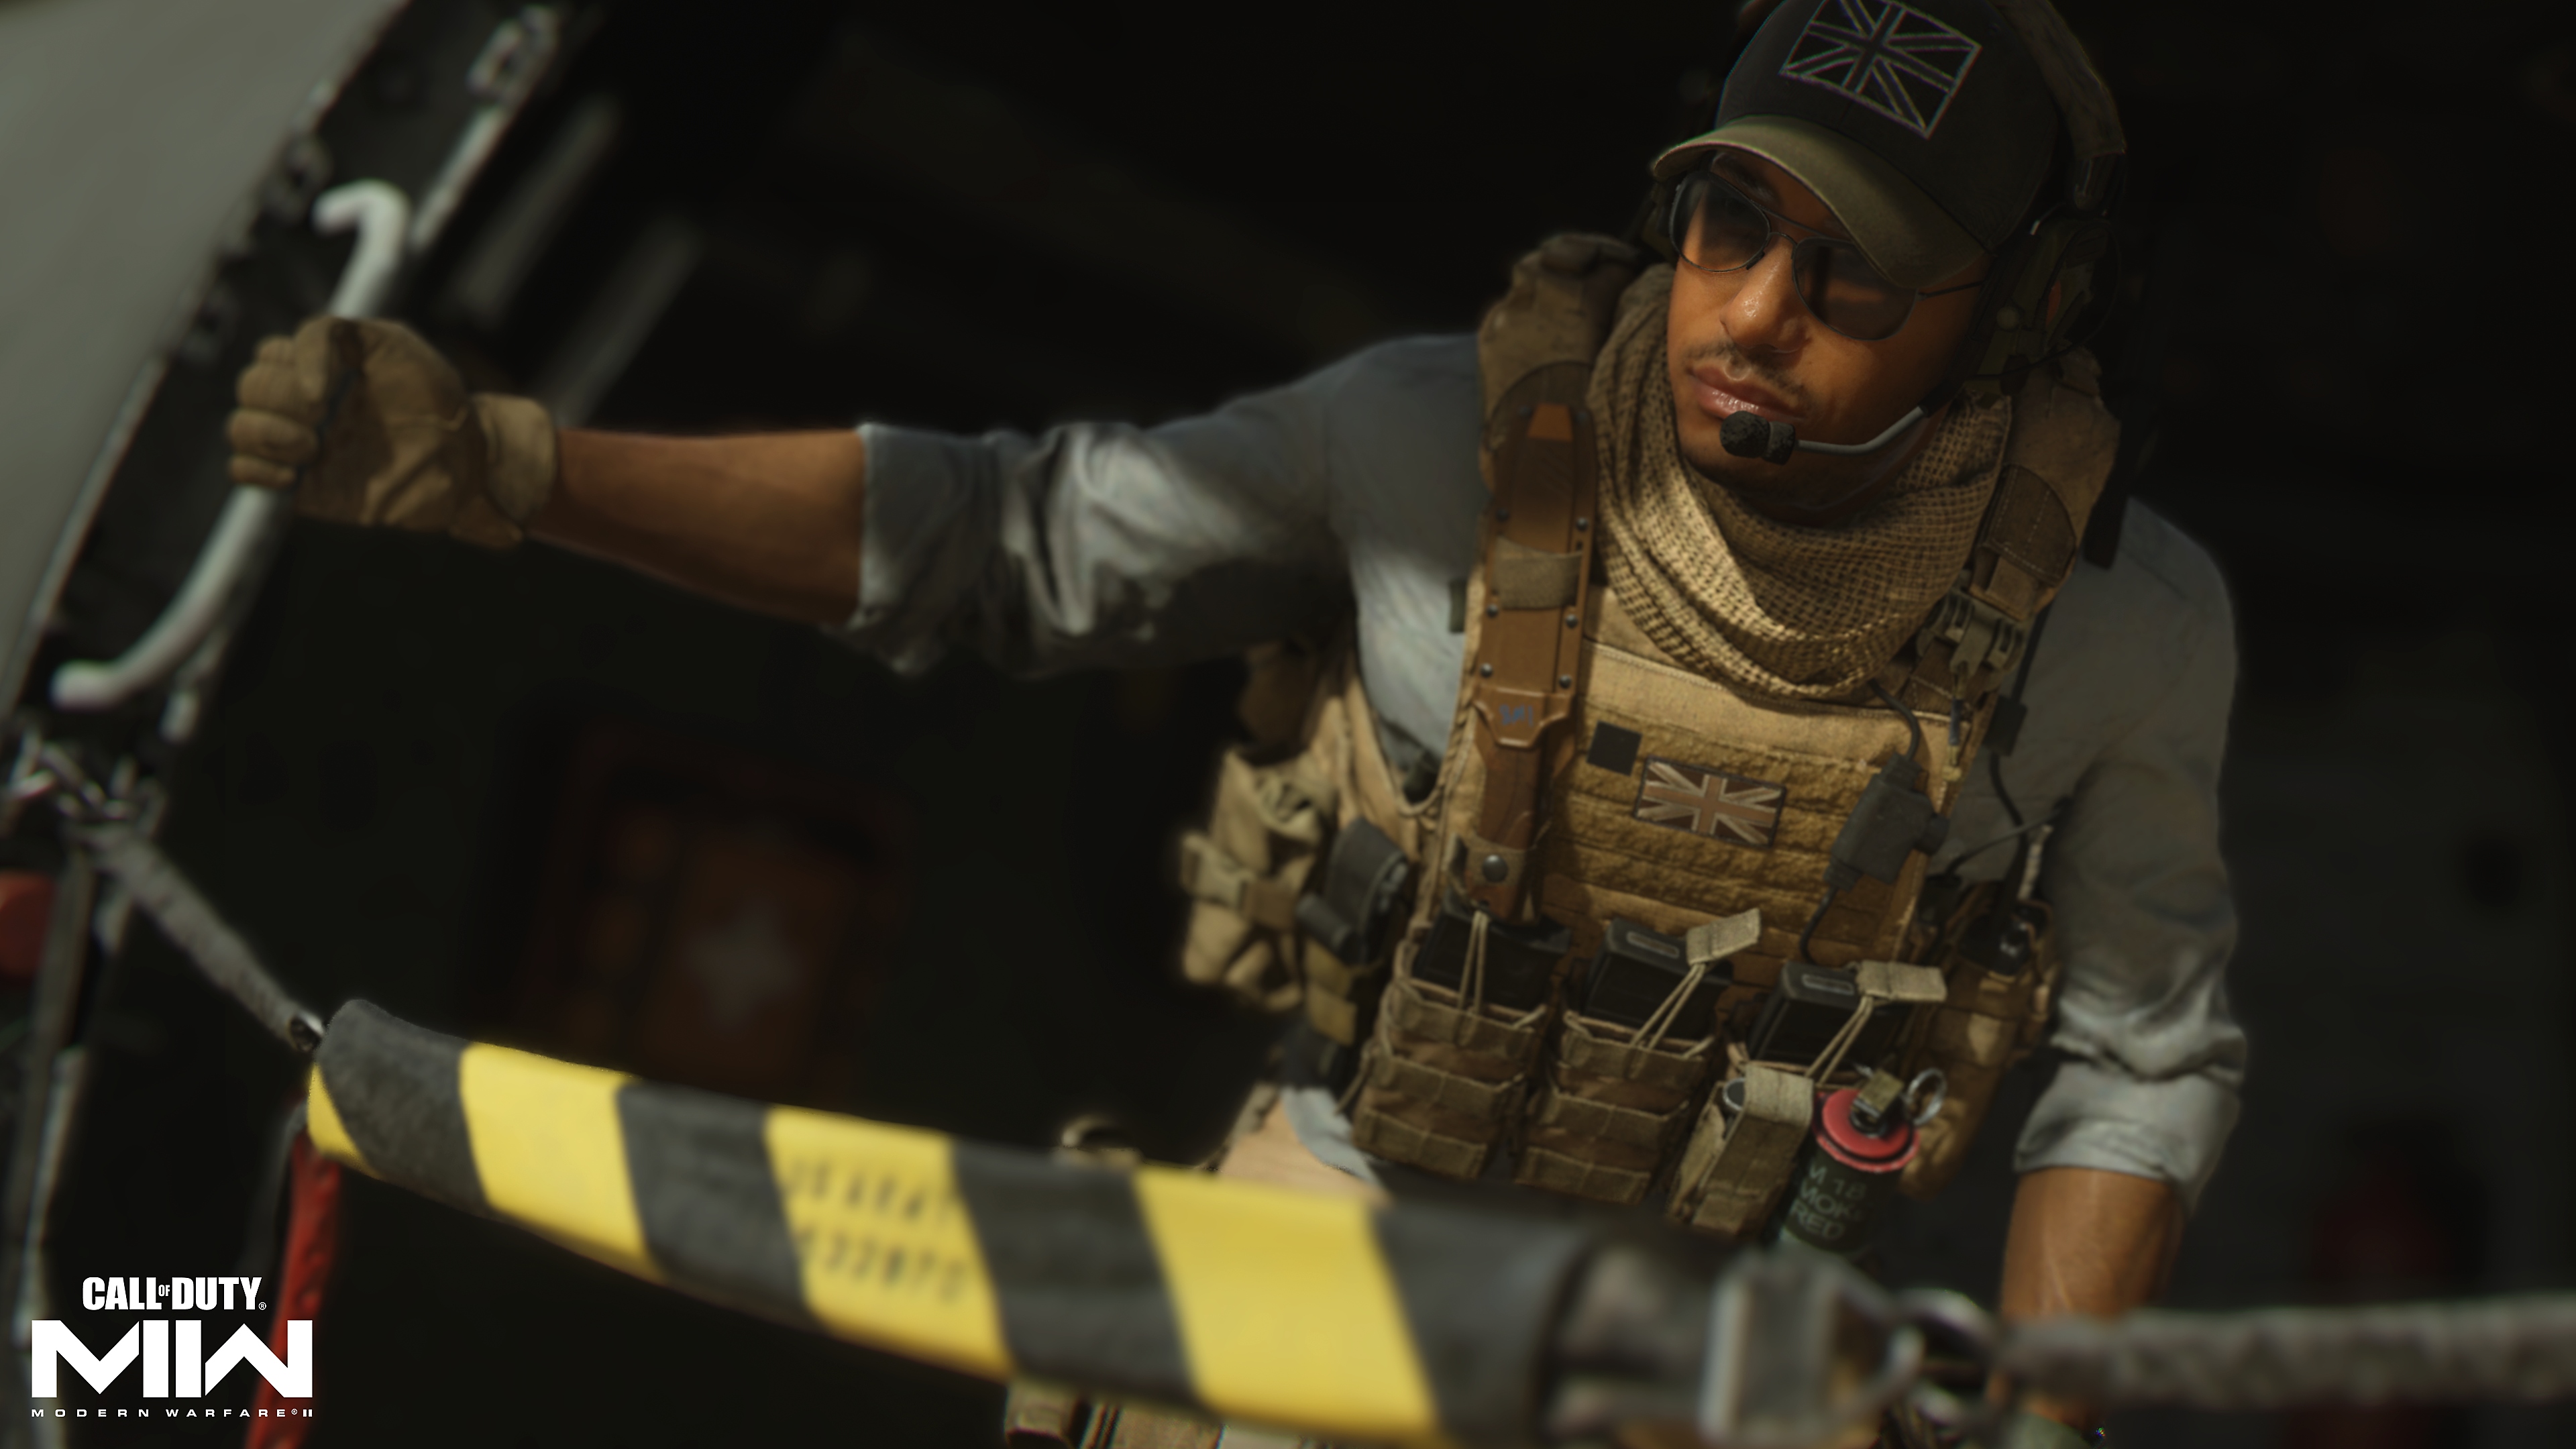 Call of Duty: Modern Warfare 2 2022 captura de pantalla mostrando a un personaje mirando un avión